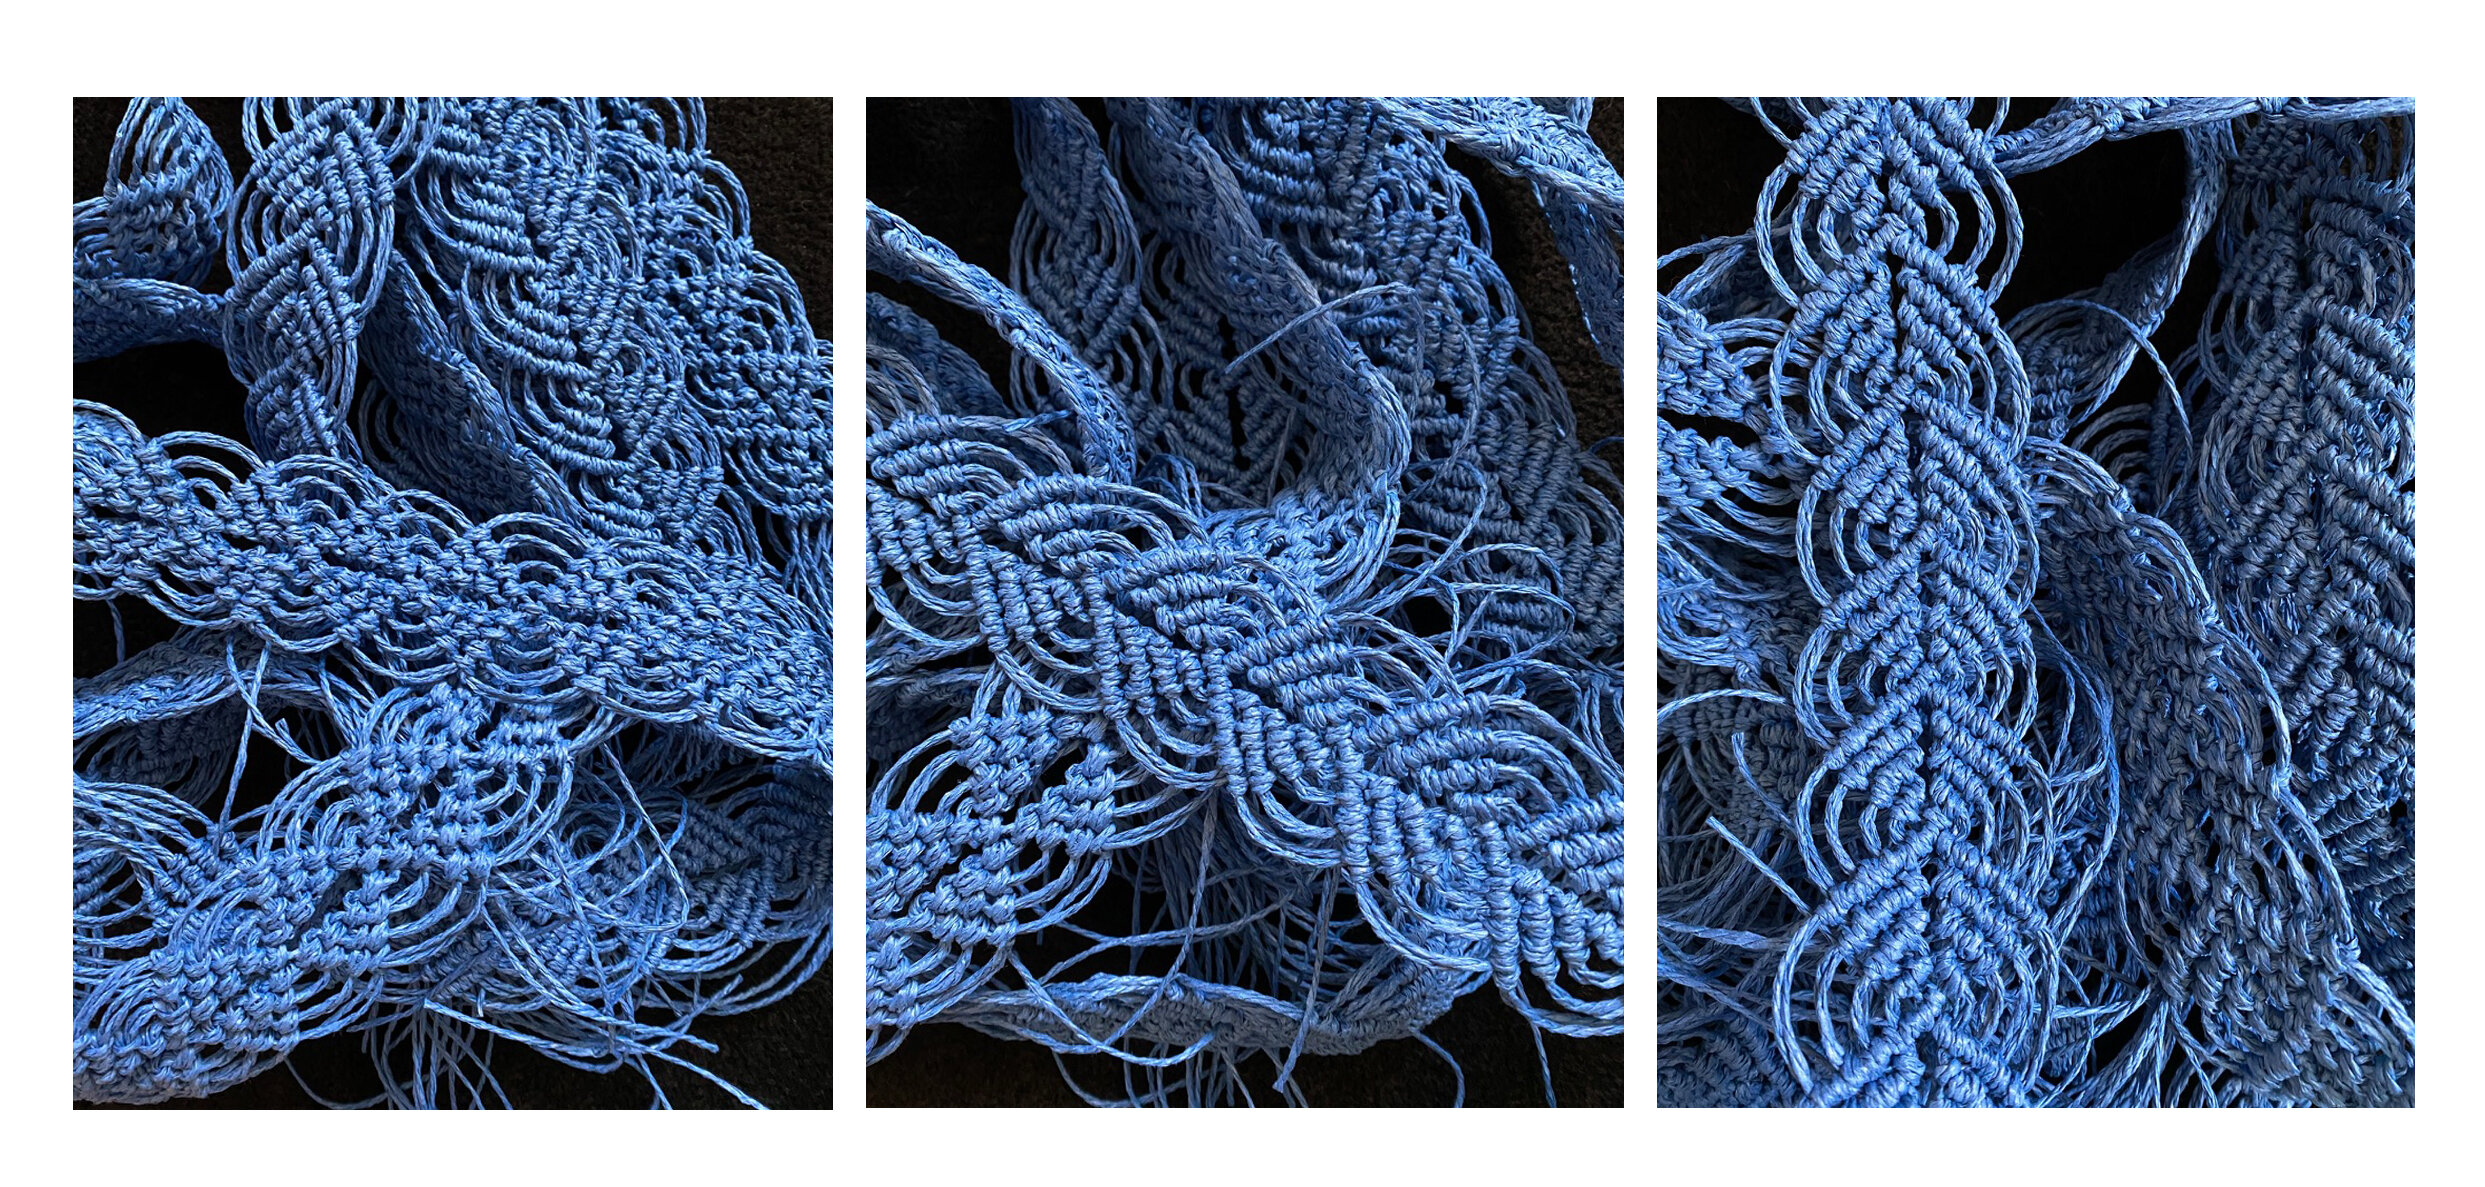  Diagonal Clove Hitch Macramé braids commissioned for Zaib Quazi, 2020 